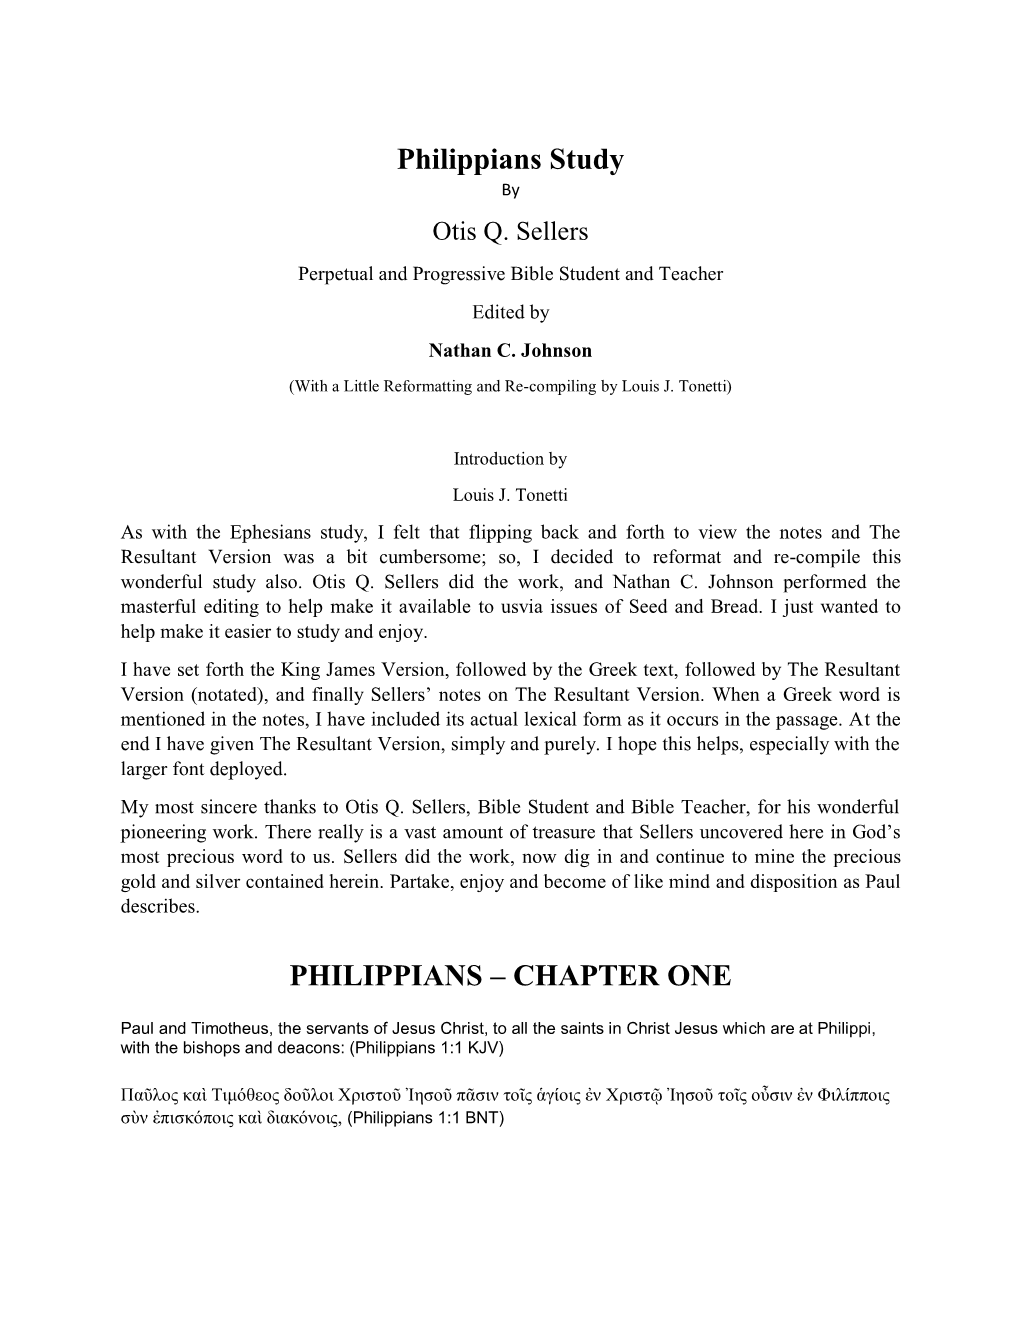 Philippians Study by Otis Q